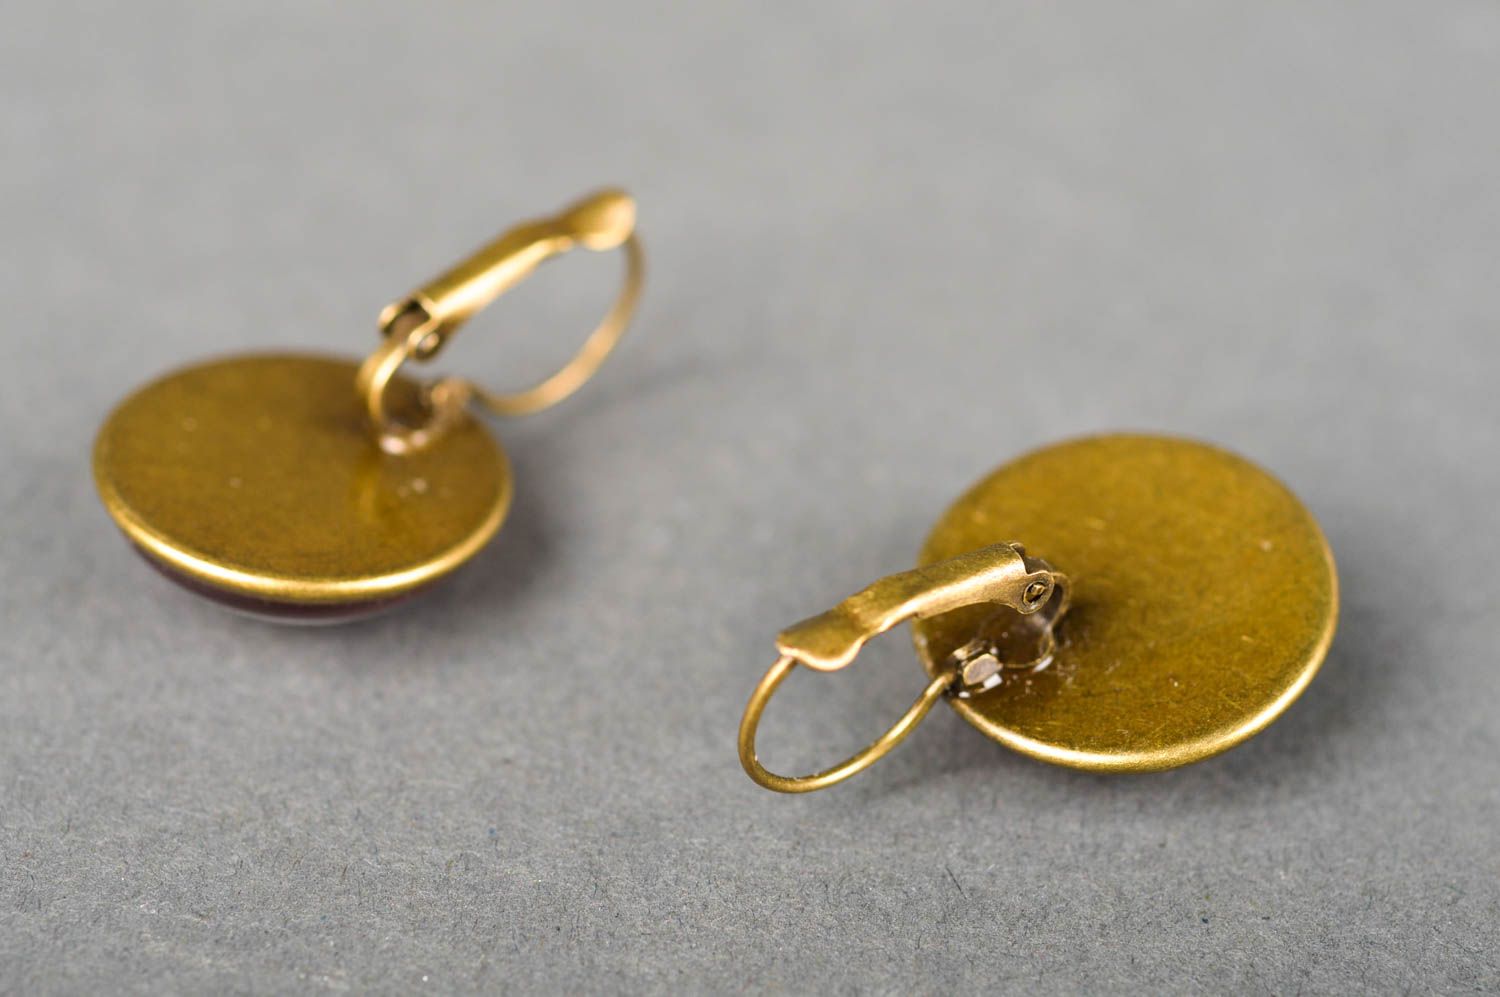 Handmade earrings with charms designer metal earrings jewelry for women photo 4